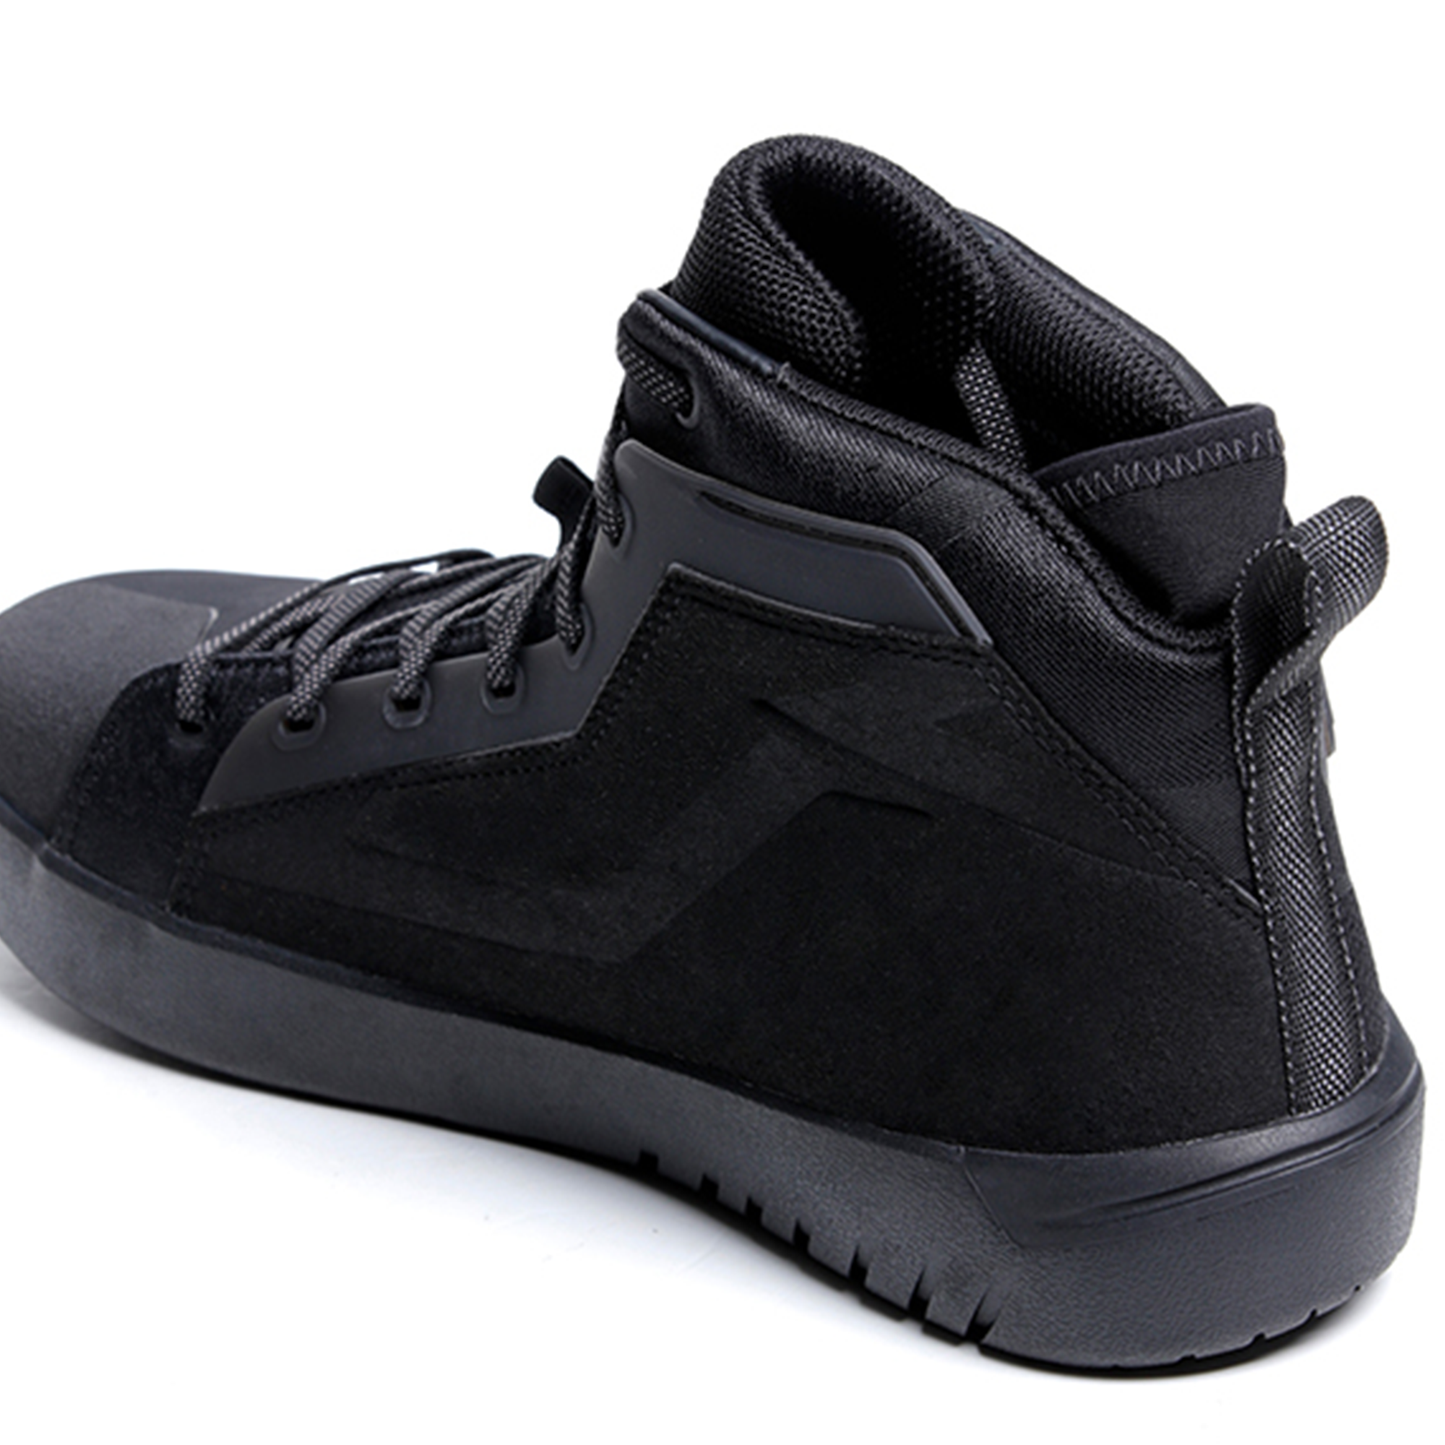 Dainese Urbactive Gore-Tex Shoes - Black (631)